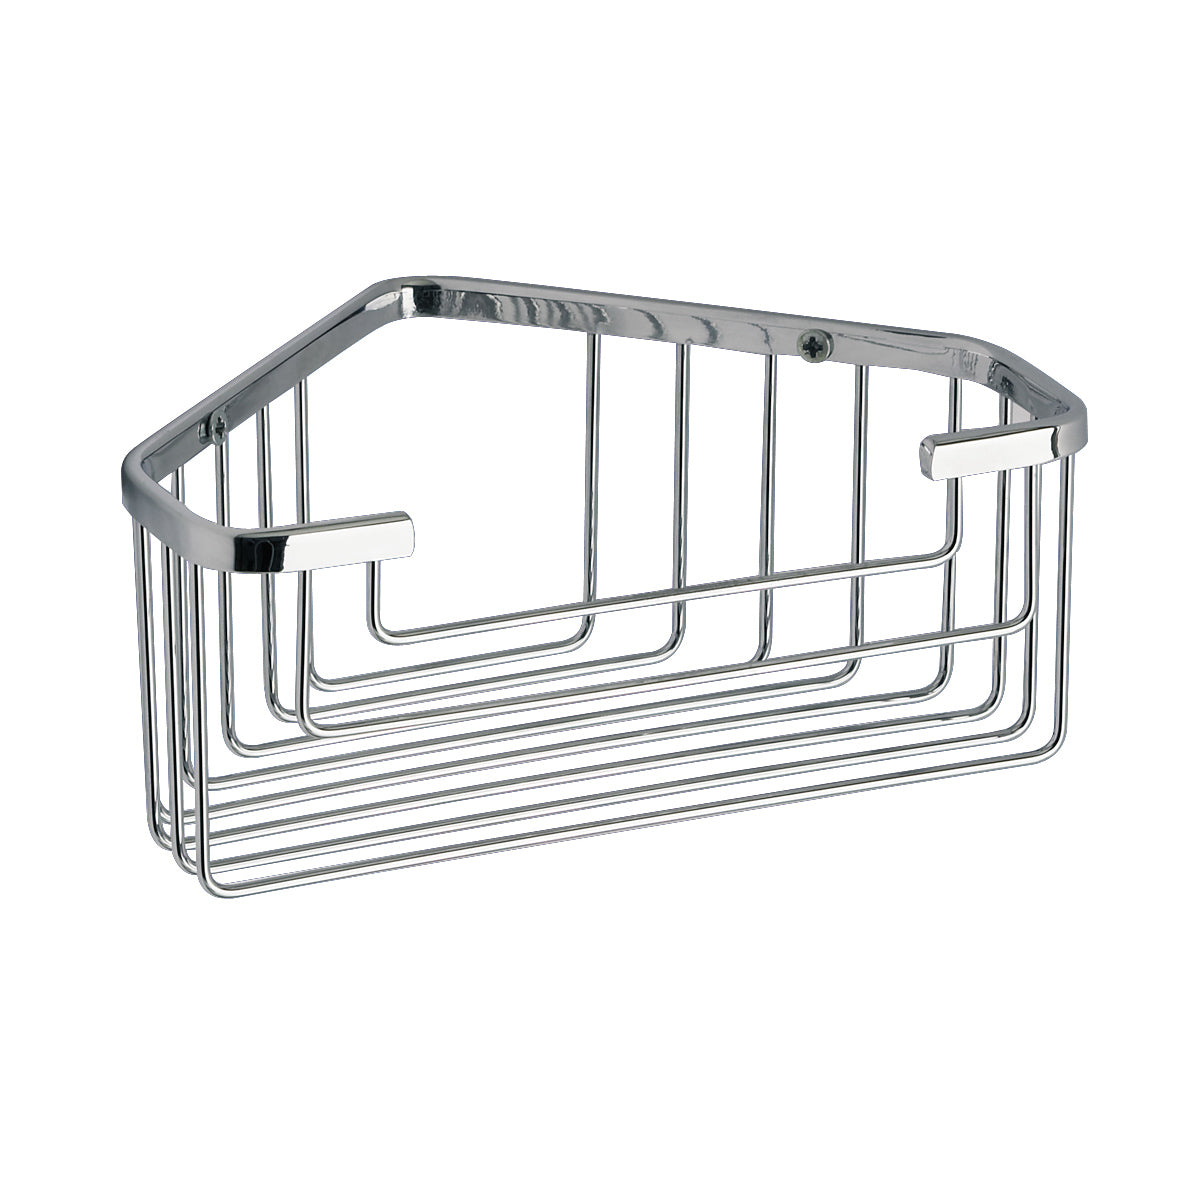 Bathroom Wall Mounted Corner Stainless Steel Caddy Storage Shelf Rack Basket